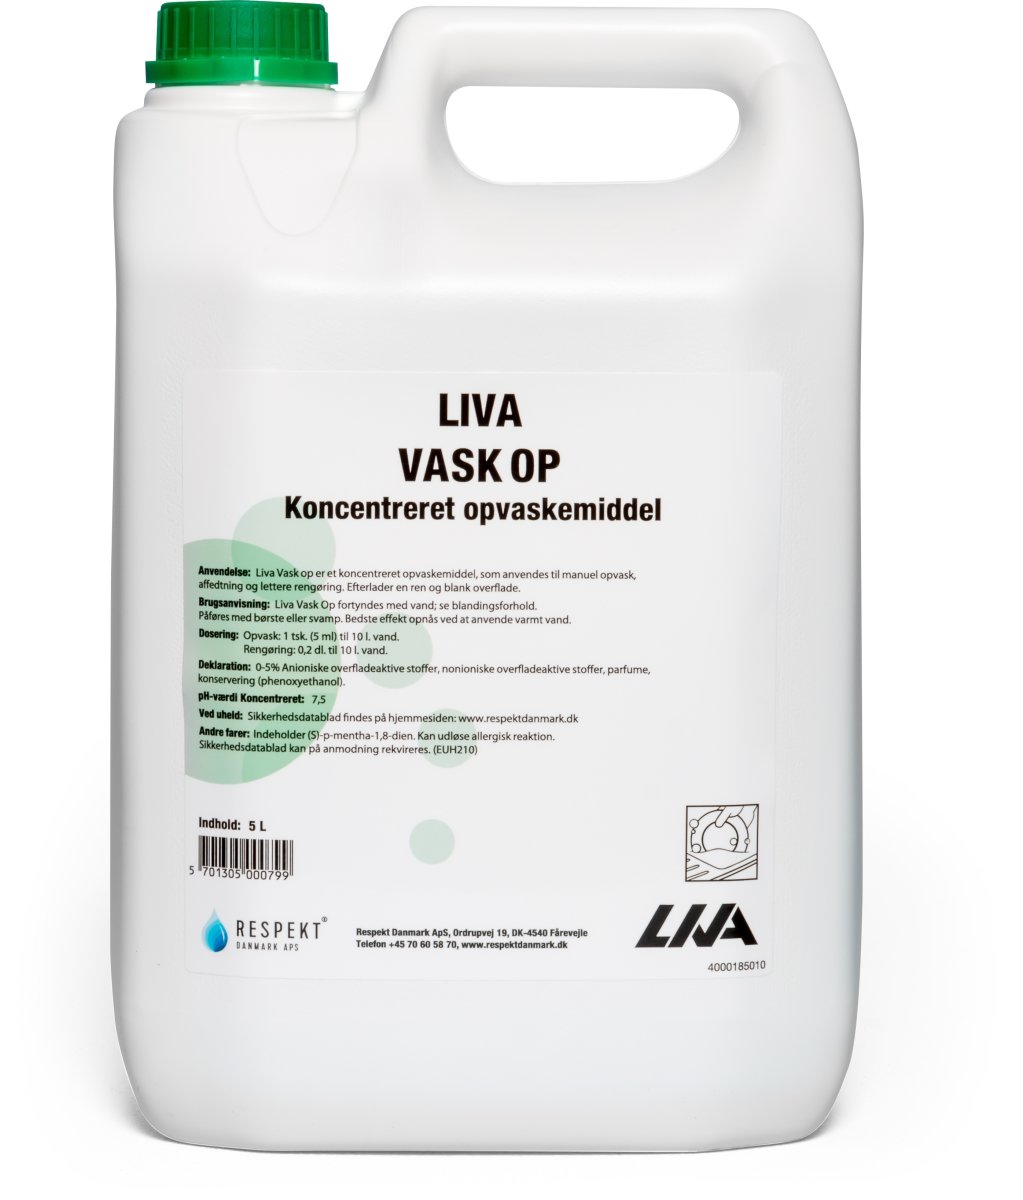 Liva "Vask Op" opvaskemiddel, 5 liter køb hos Lomax1 | Lomax